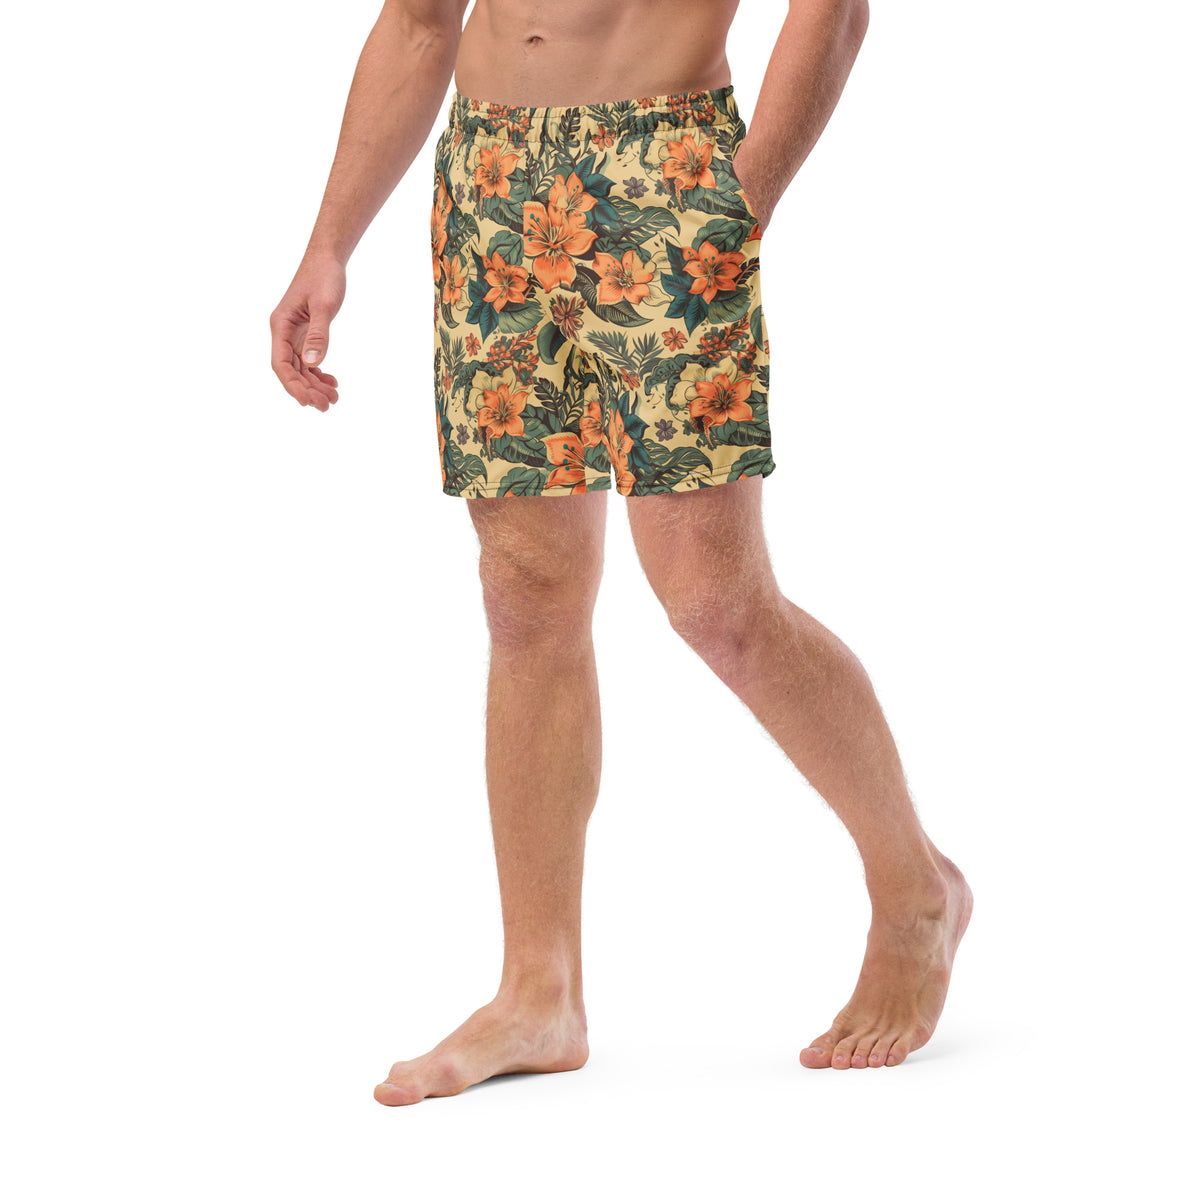 Tropical Hibiscus Gun Hawaiian Swim Trunks for Men